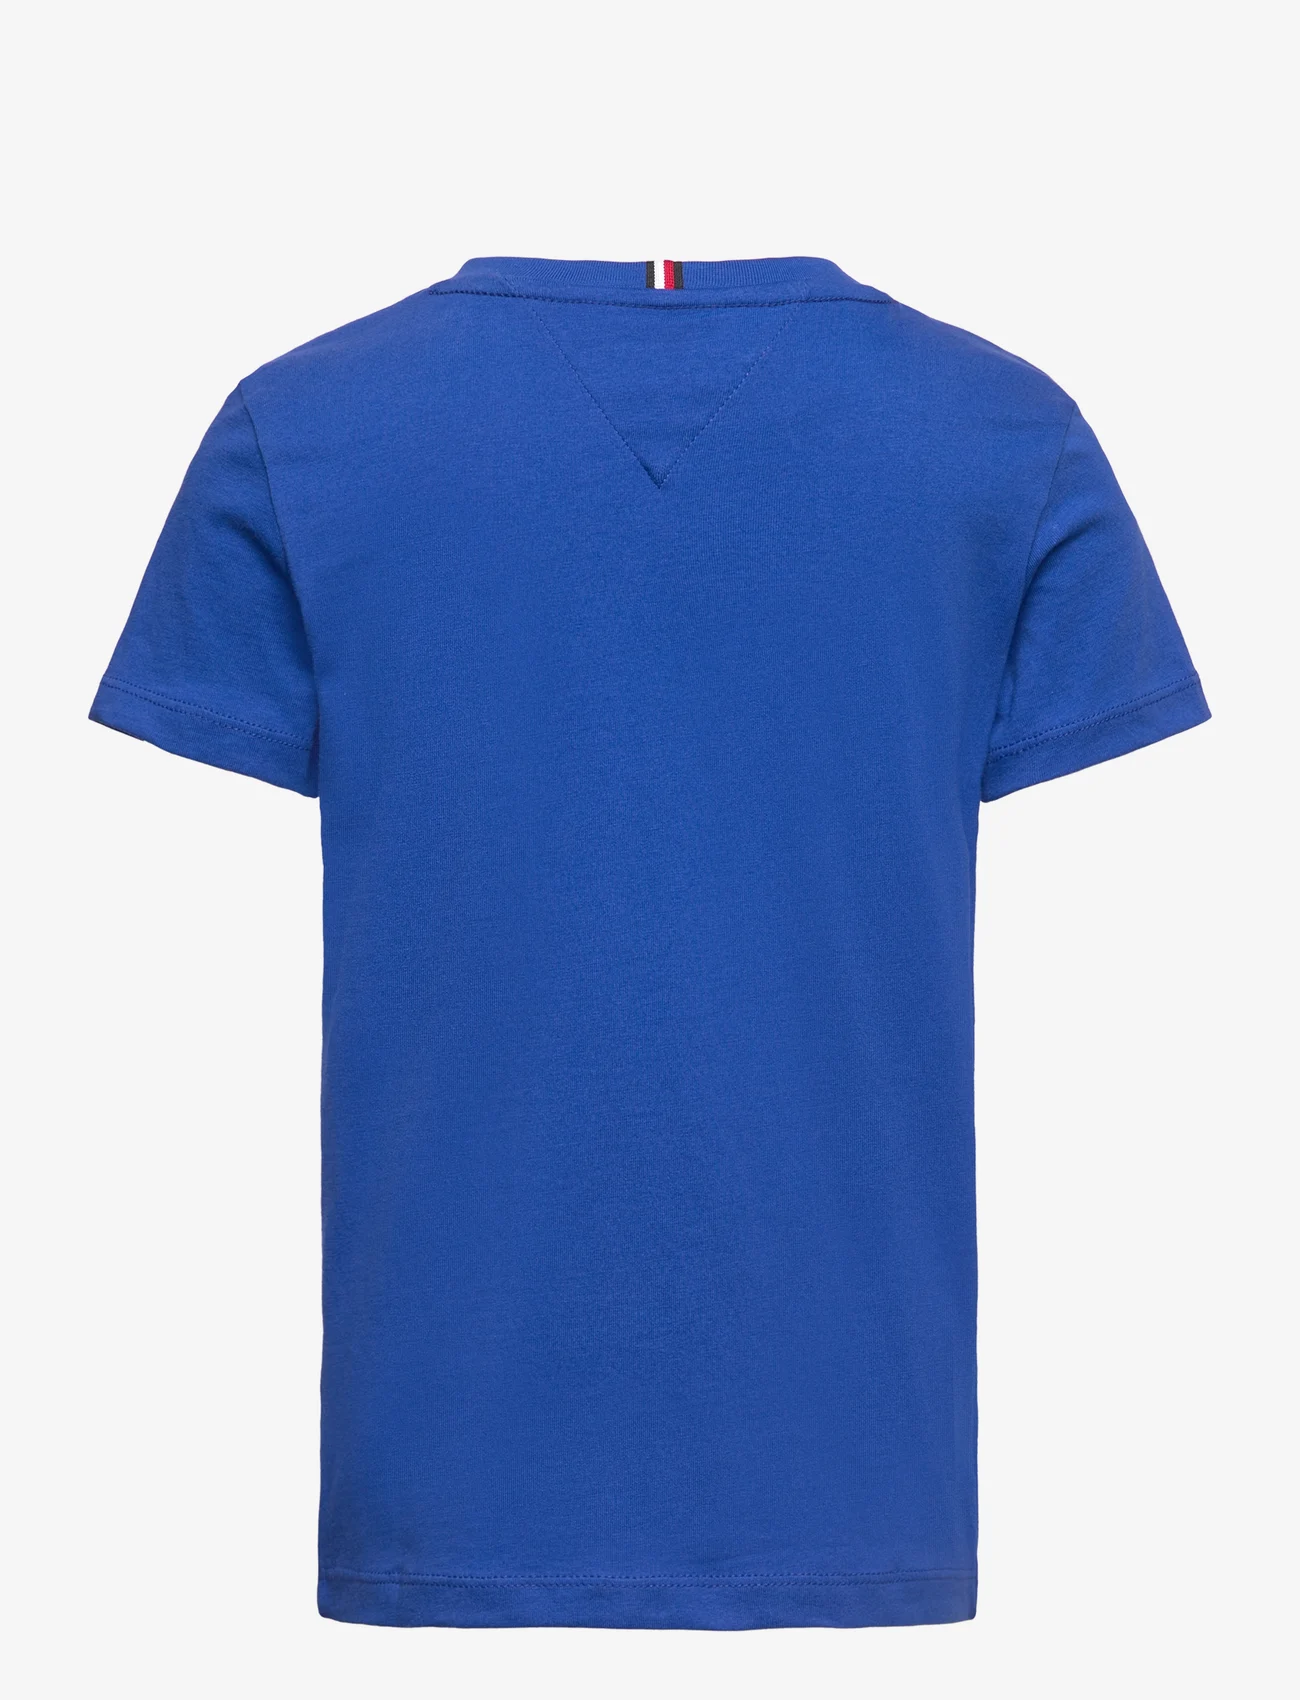 Tommy Hilfiger - TH LOGO TEE S/S - kortärmade t-shirts - ultra blue - 1